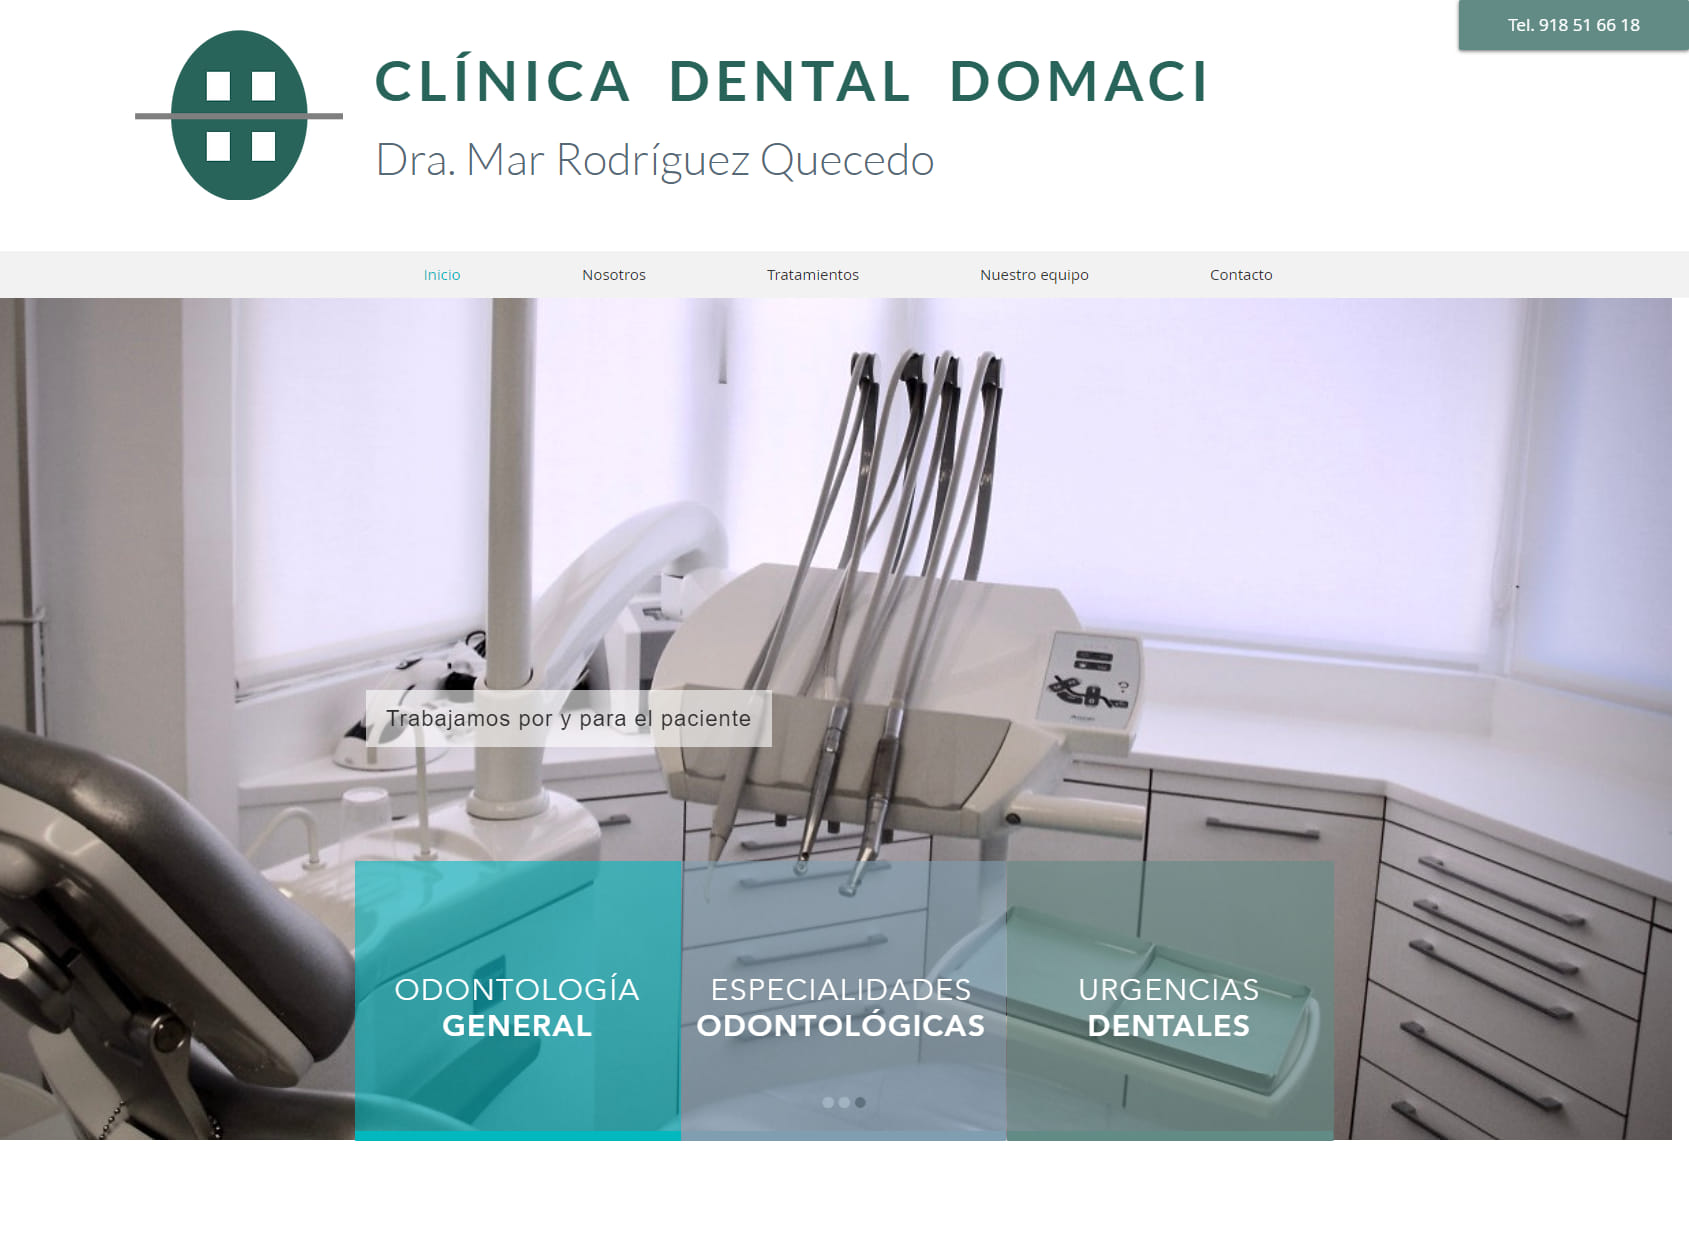 Clínica Dental Domaci - Dra. Mar Rodríguez Quecedo